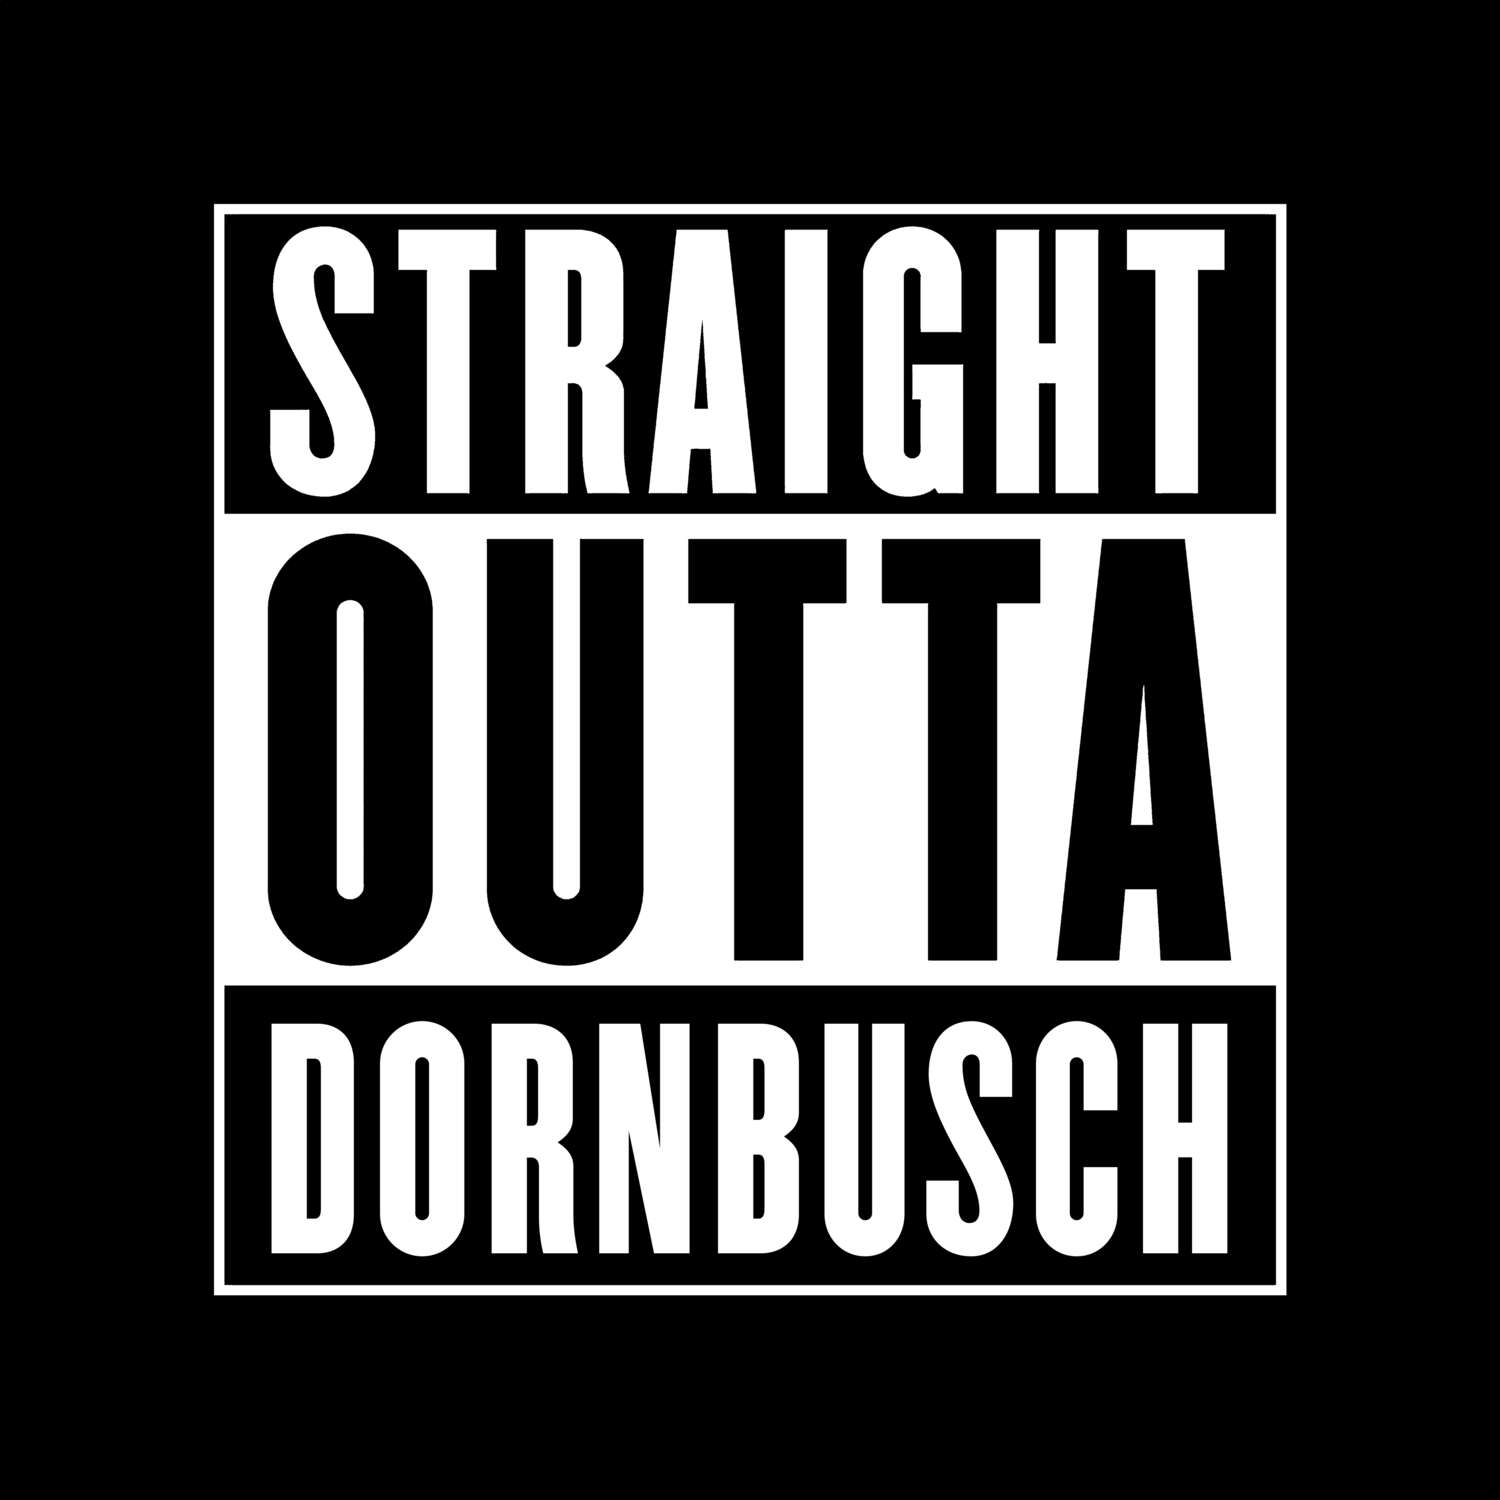 Dornbusch T-Shirt »Straight Outta«